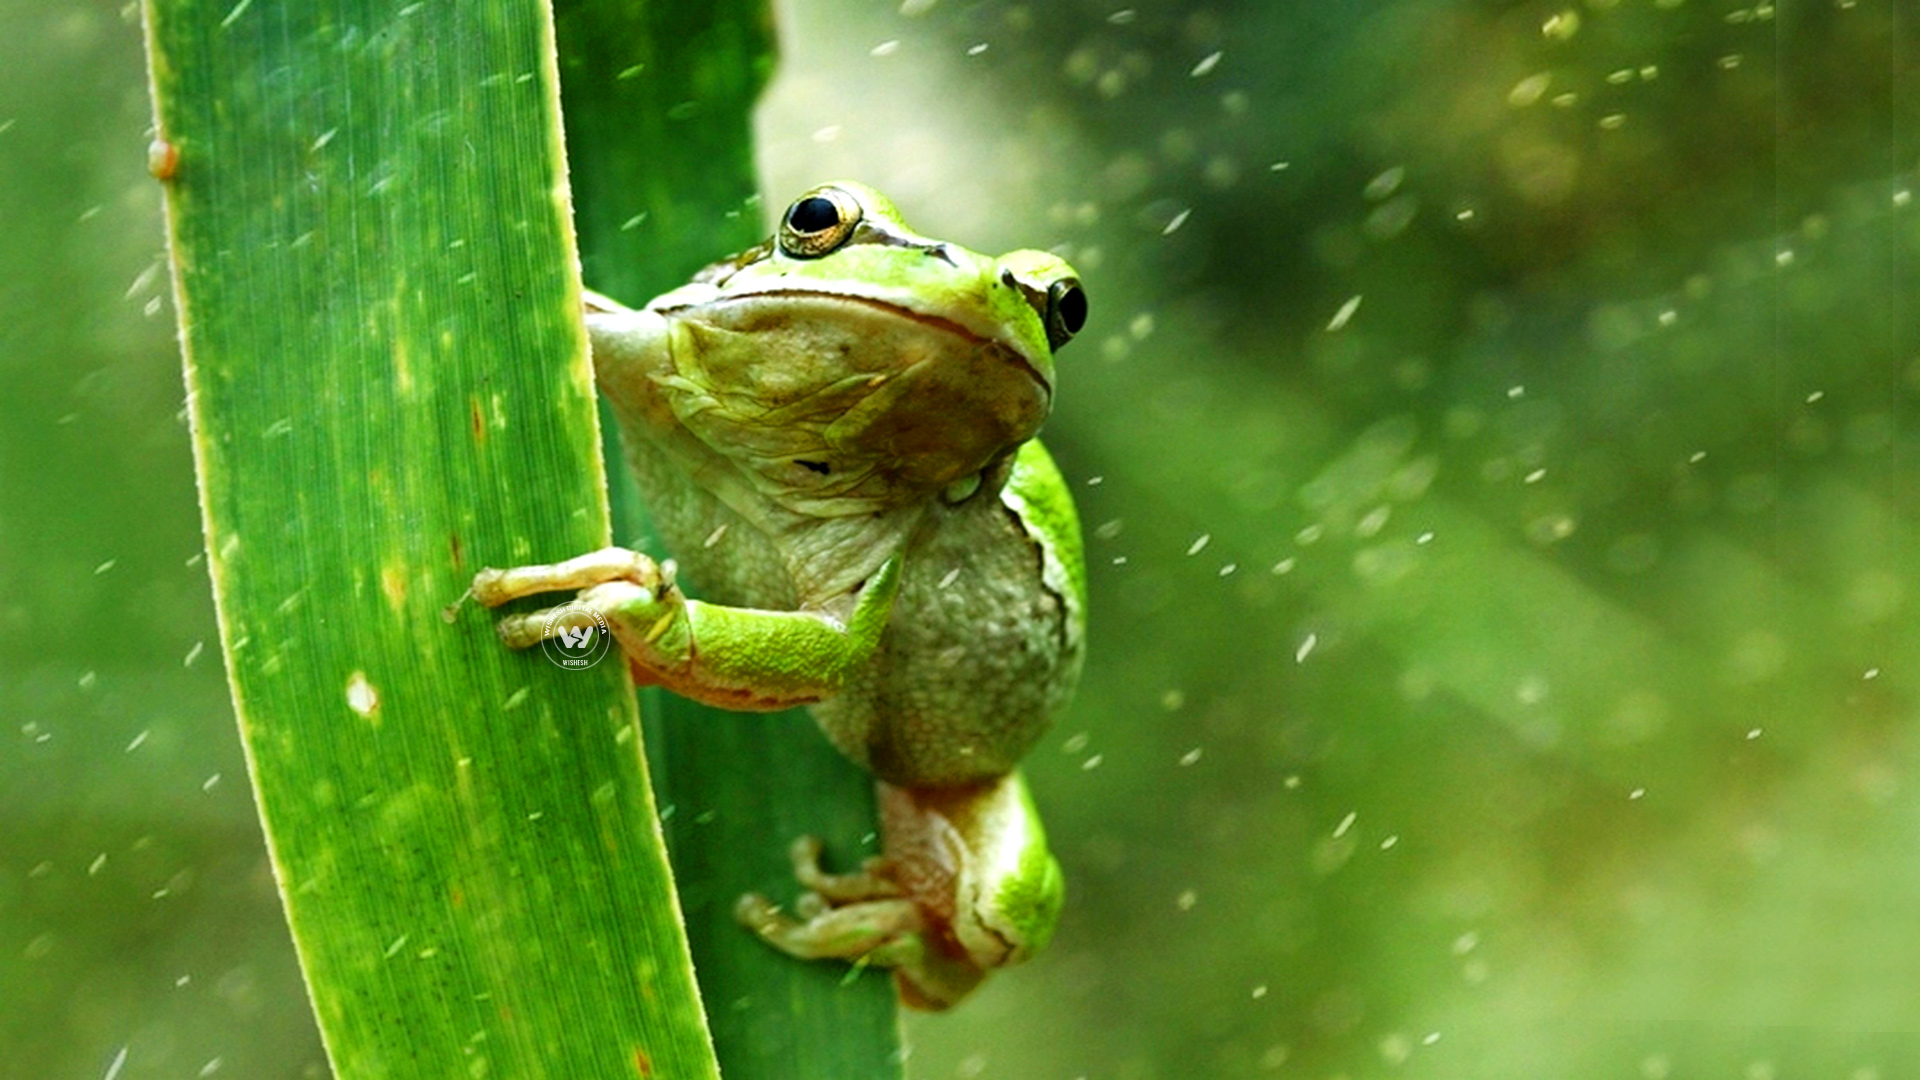 Wallpaper 2of 5 | frog | Frog in the rain | Frog in the rain wallpapers